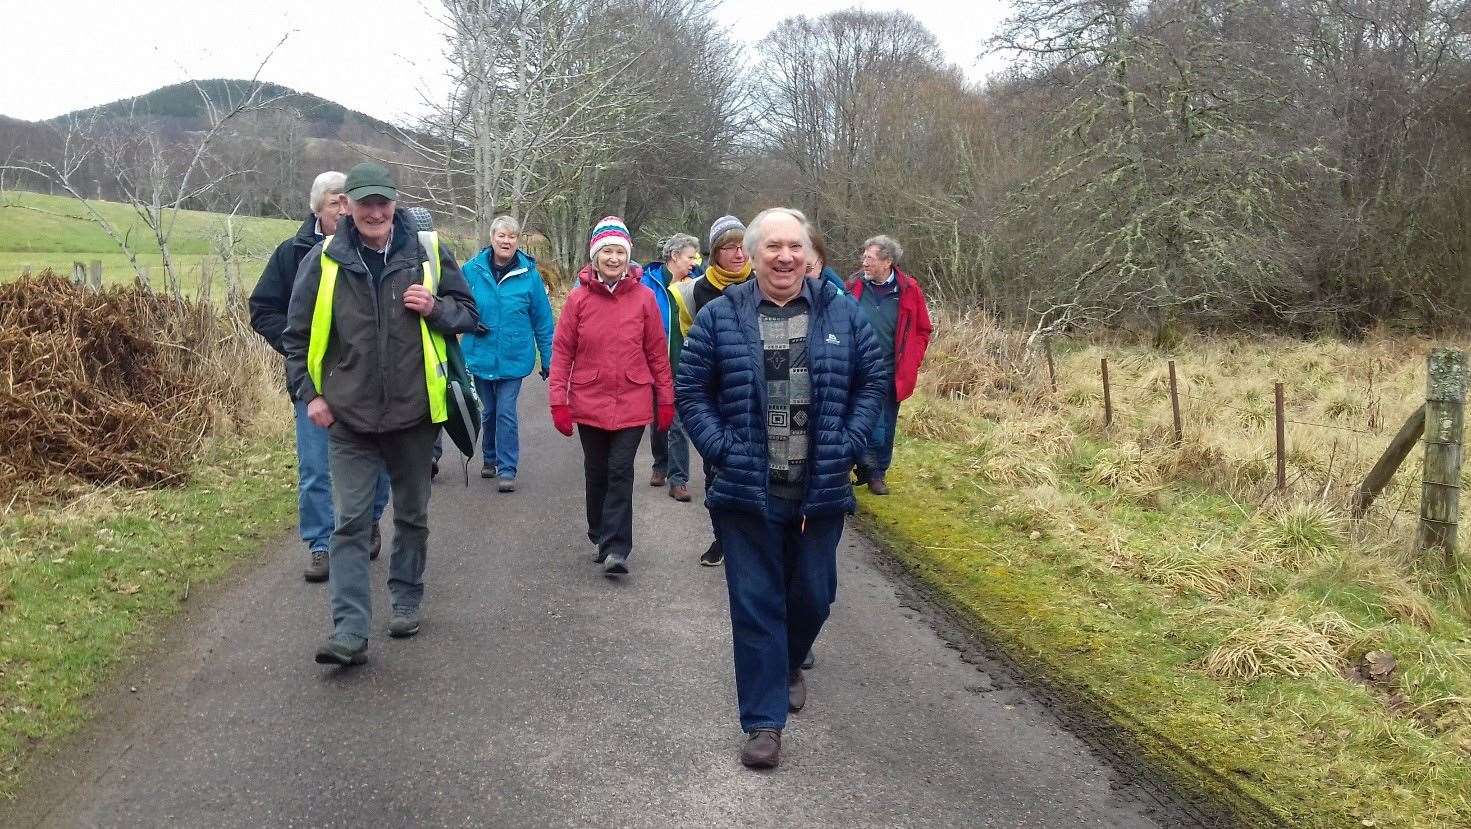 Last year's anniversary walk at Balnain in March 2019.